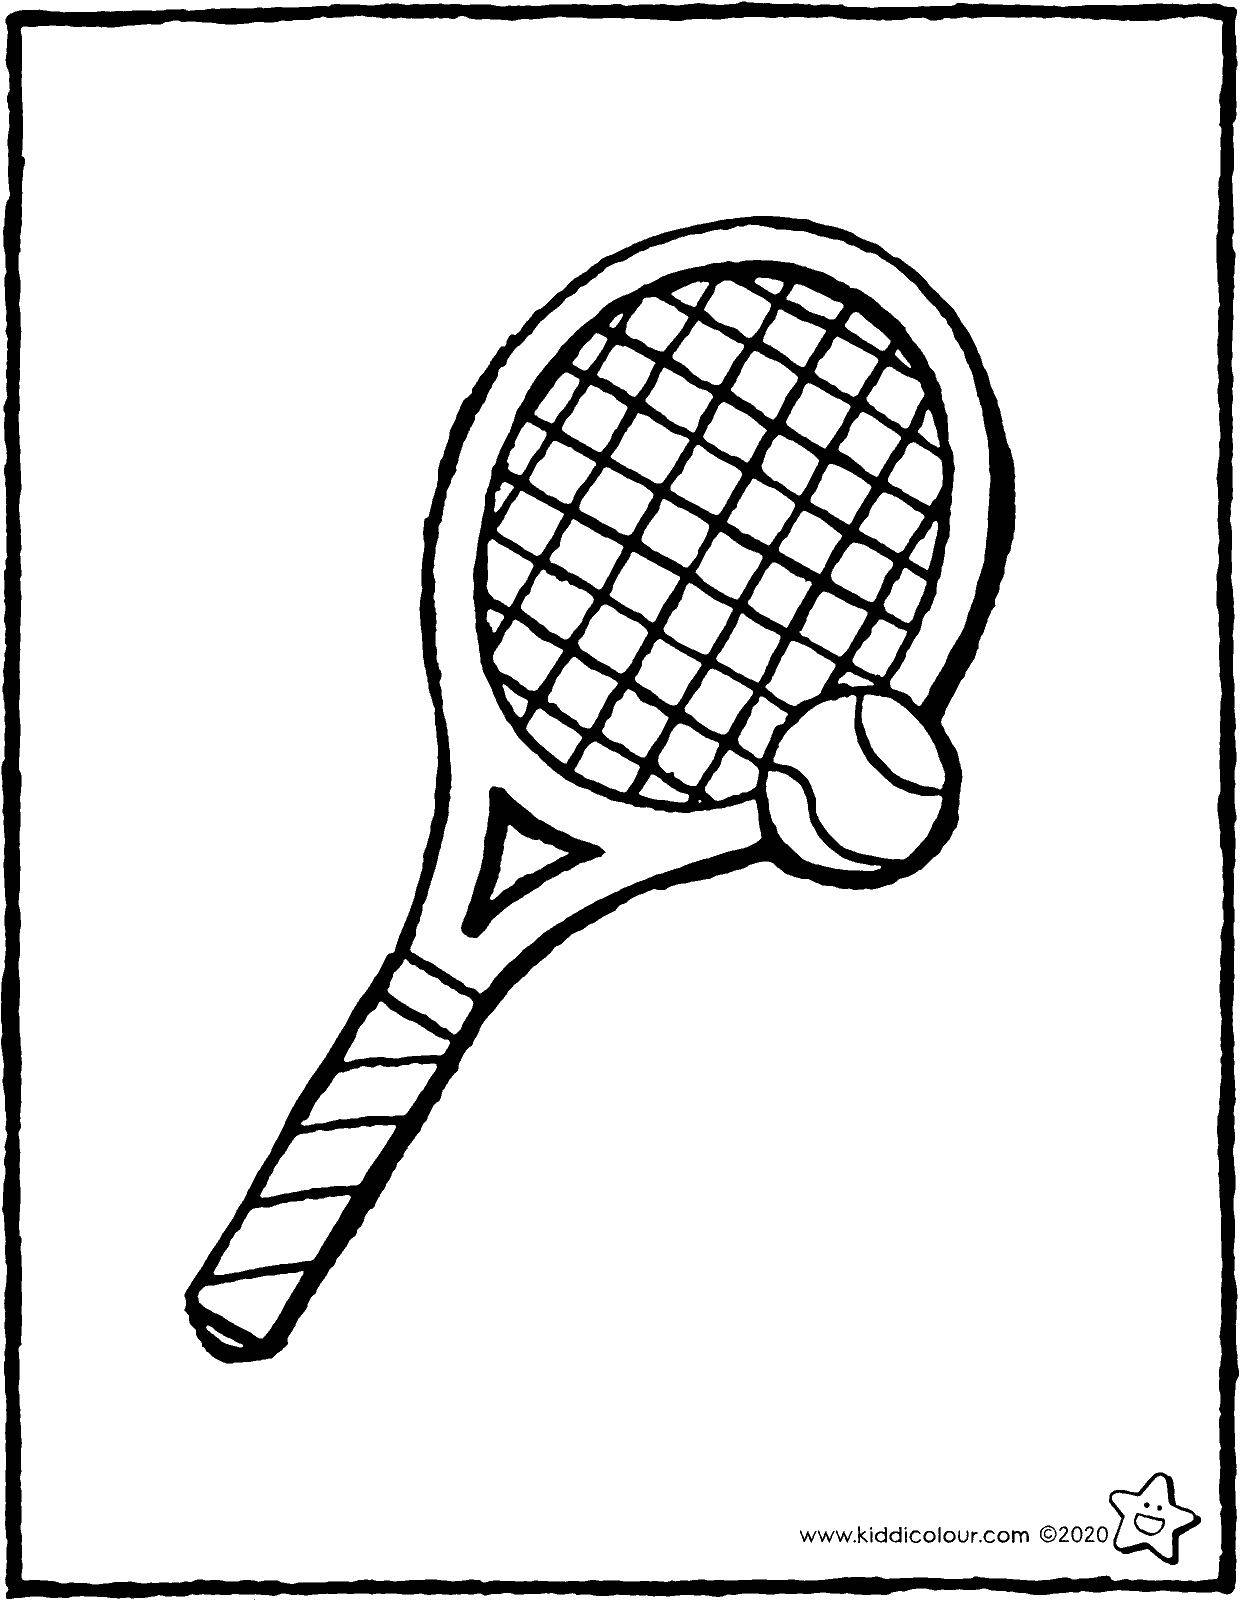 tennis racquet and tennis ball - kiddicolour